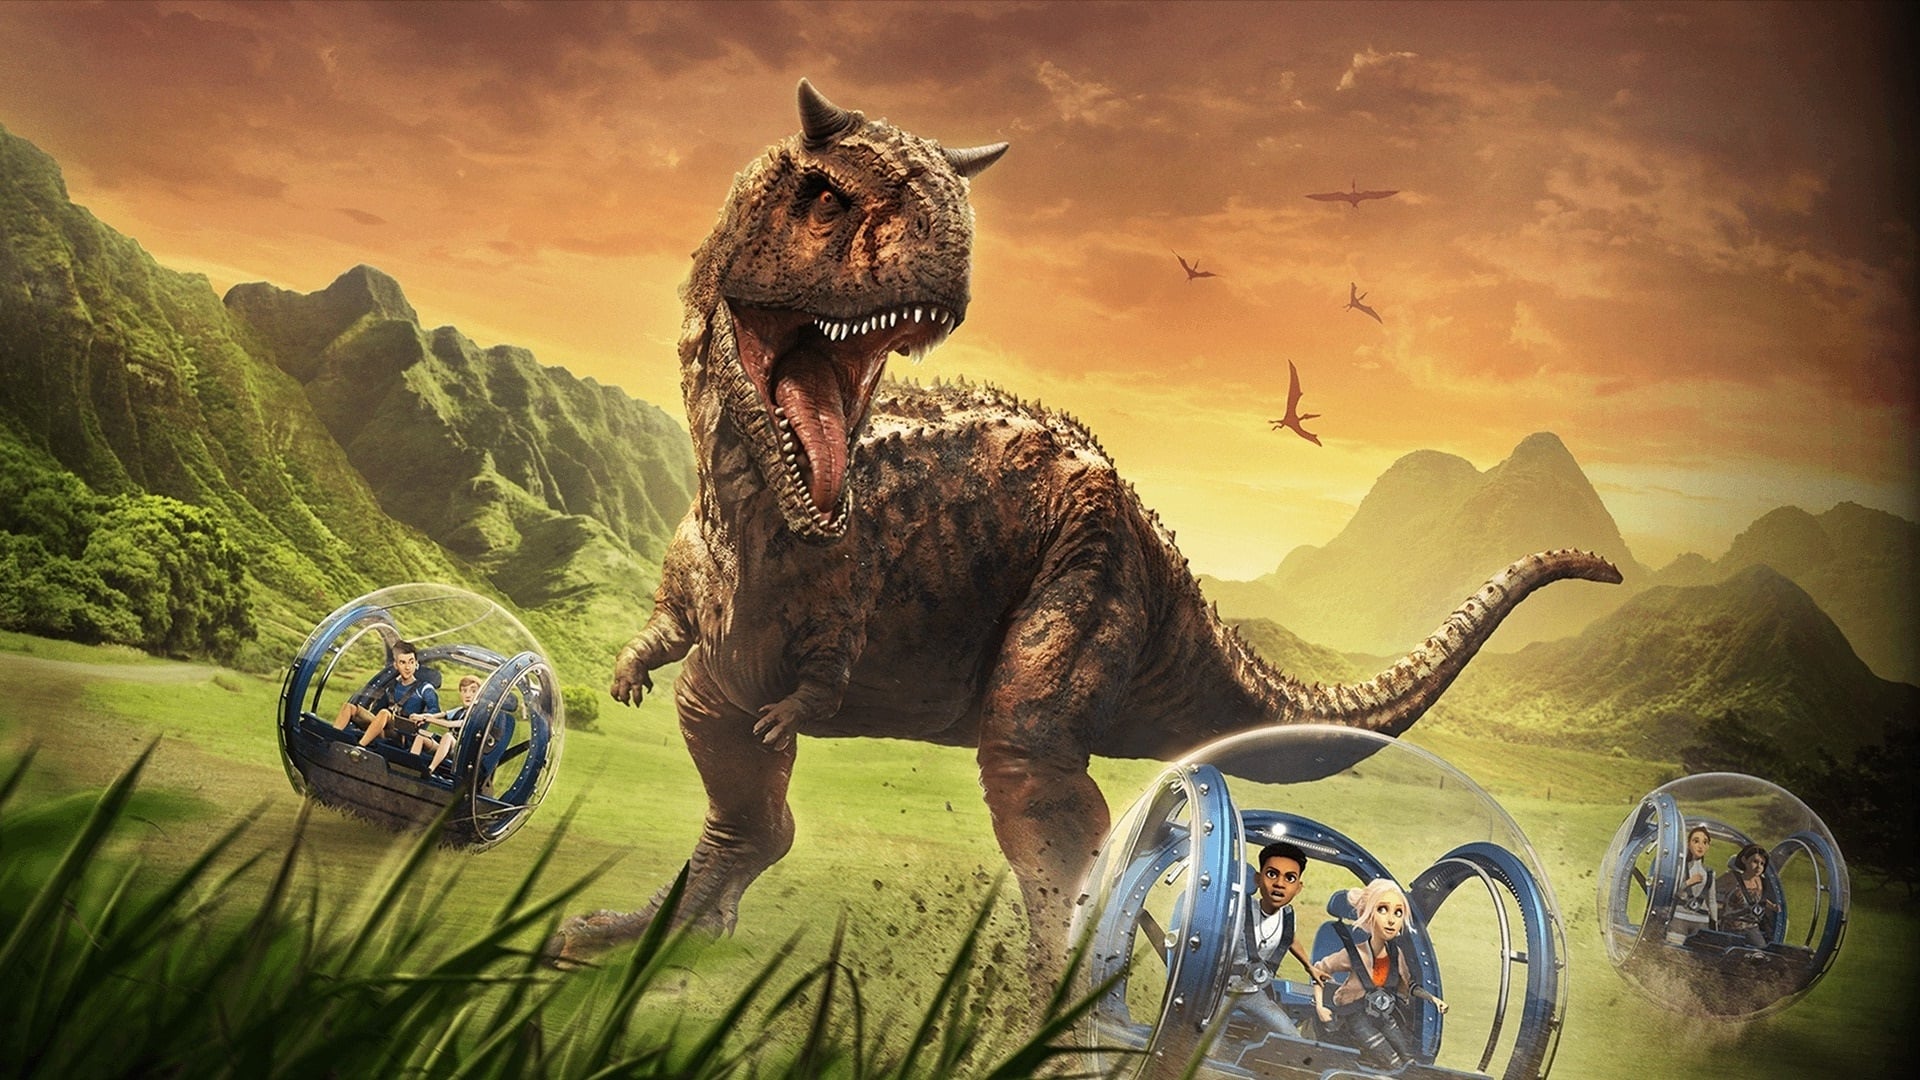 TV Show Jurassic World: Camp Cretaceous HD Wallpaper | Background Image